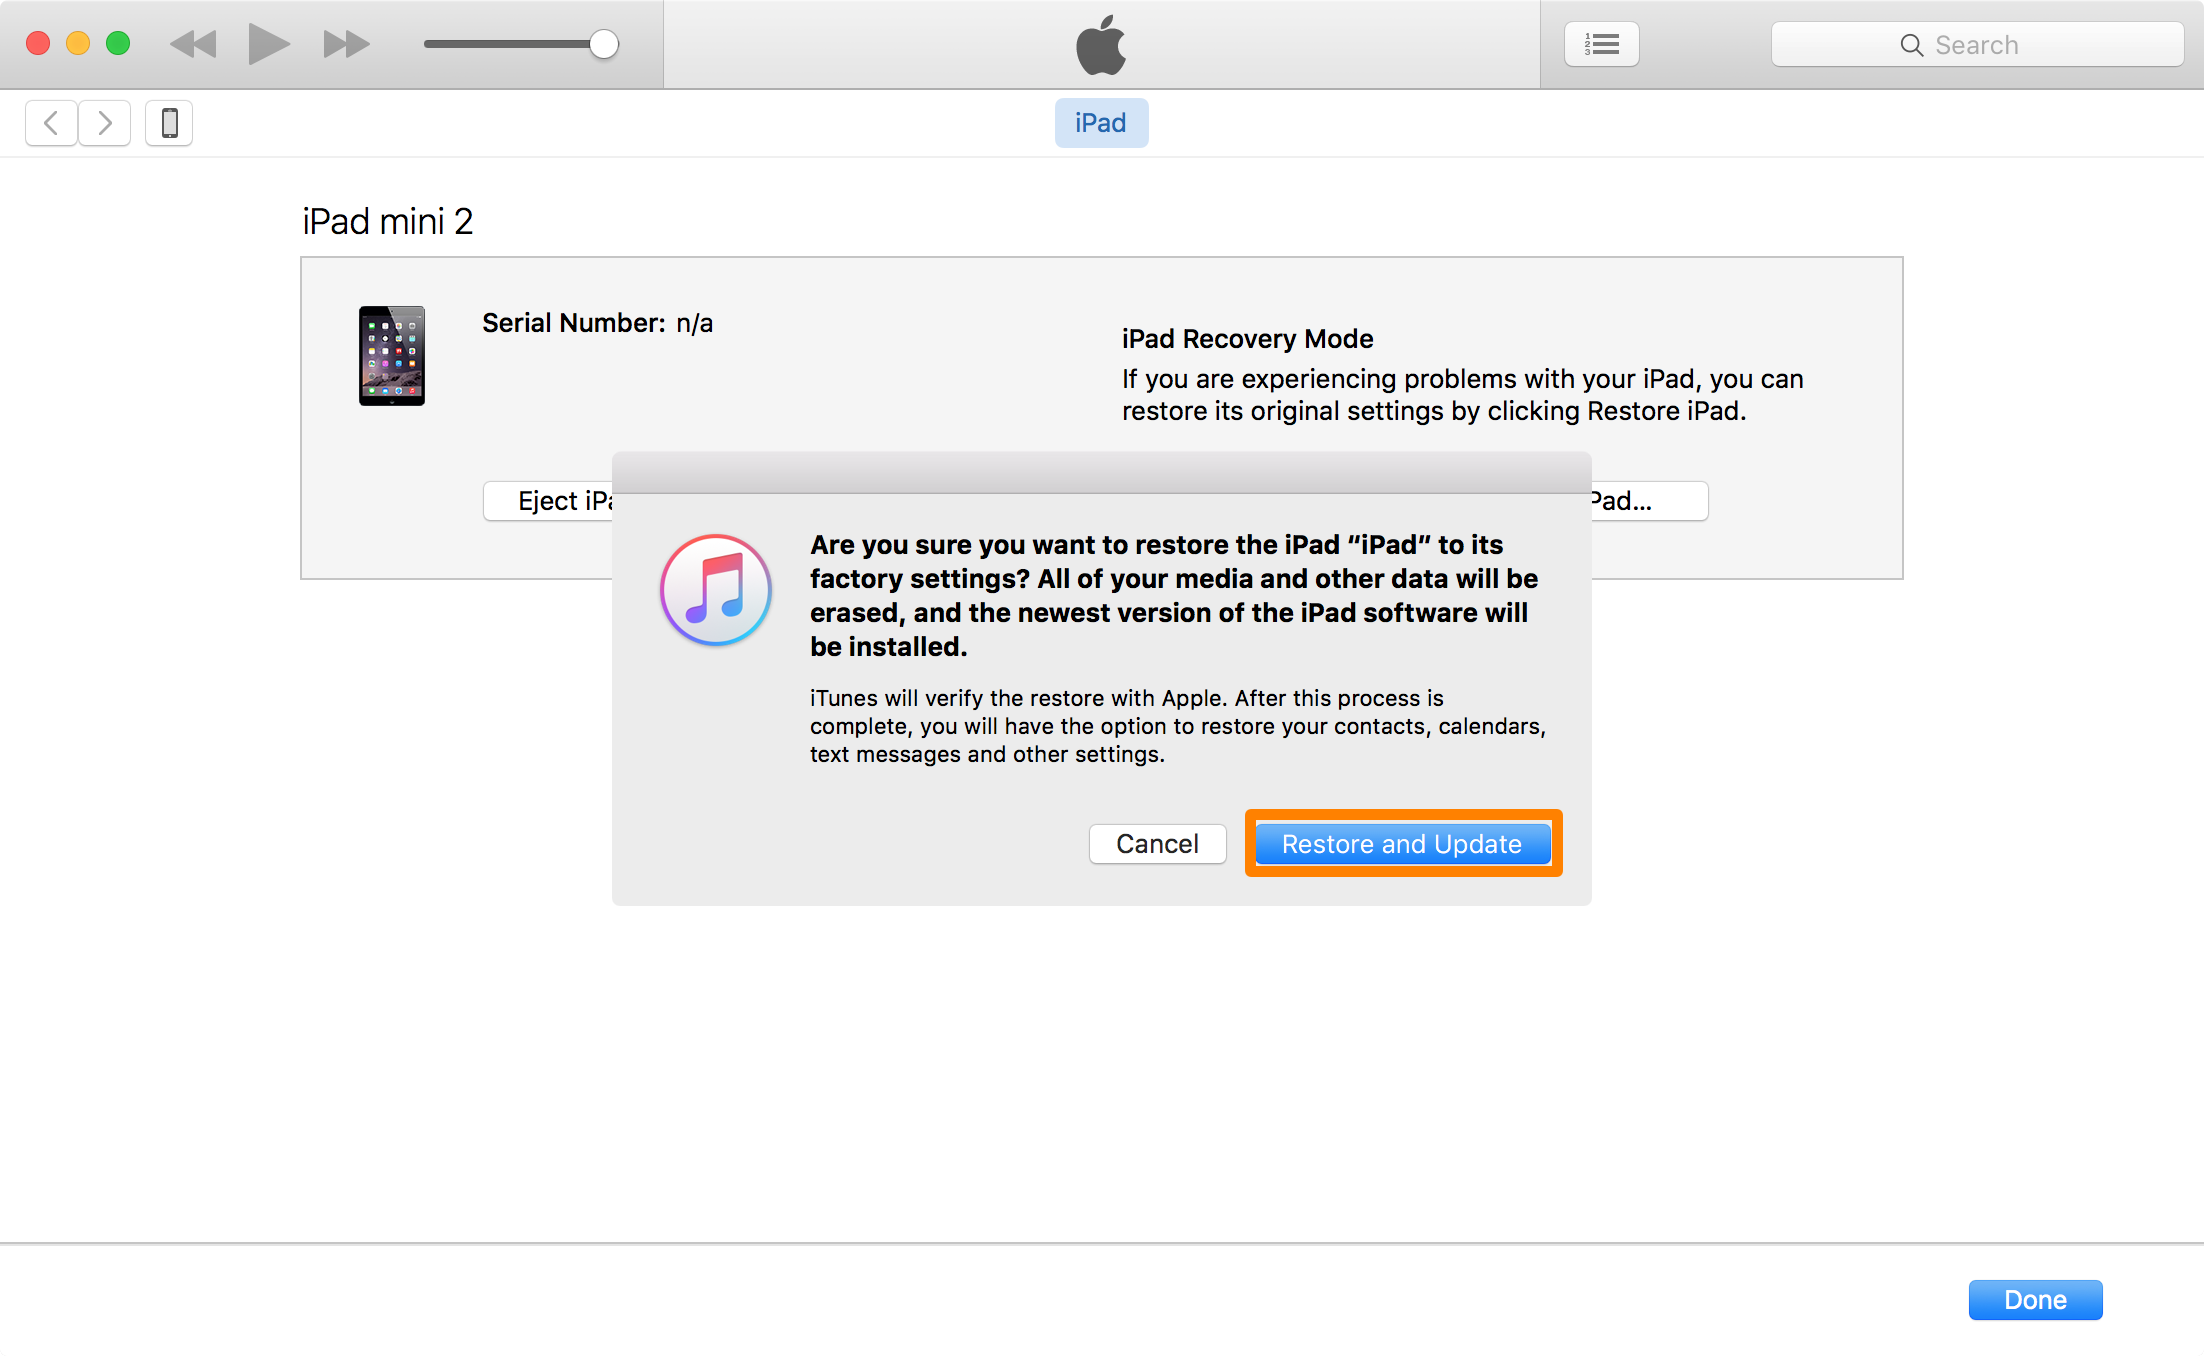 iTunes Restore and Update